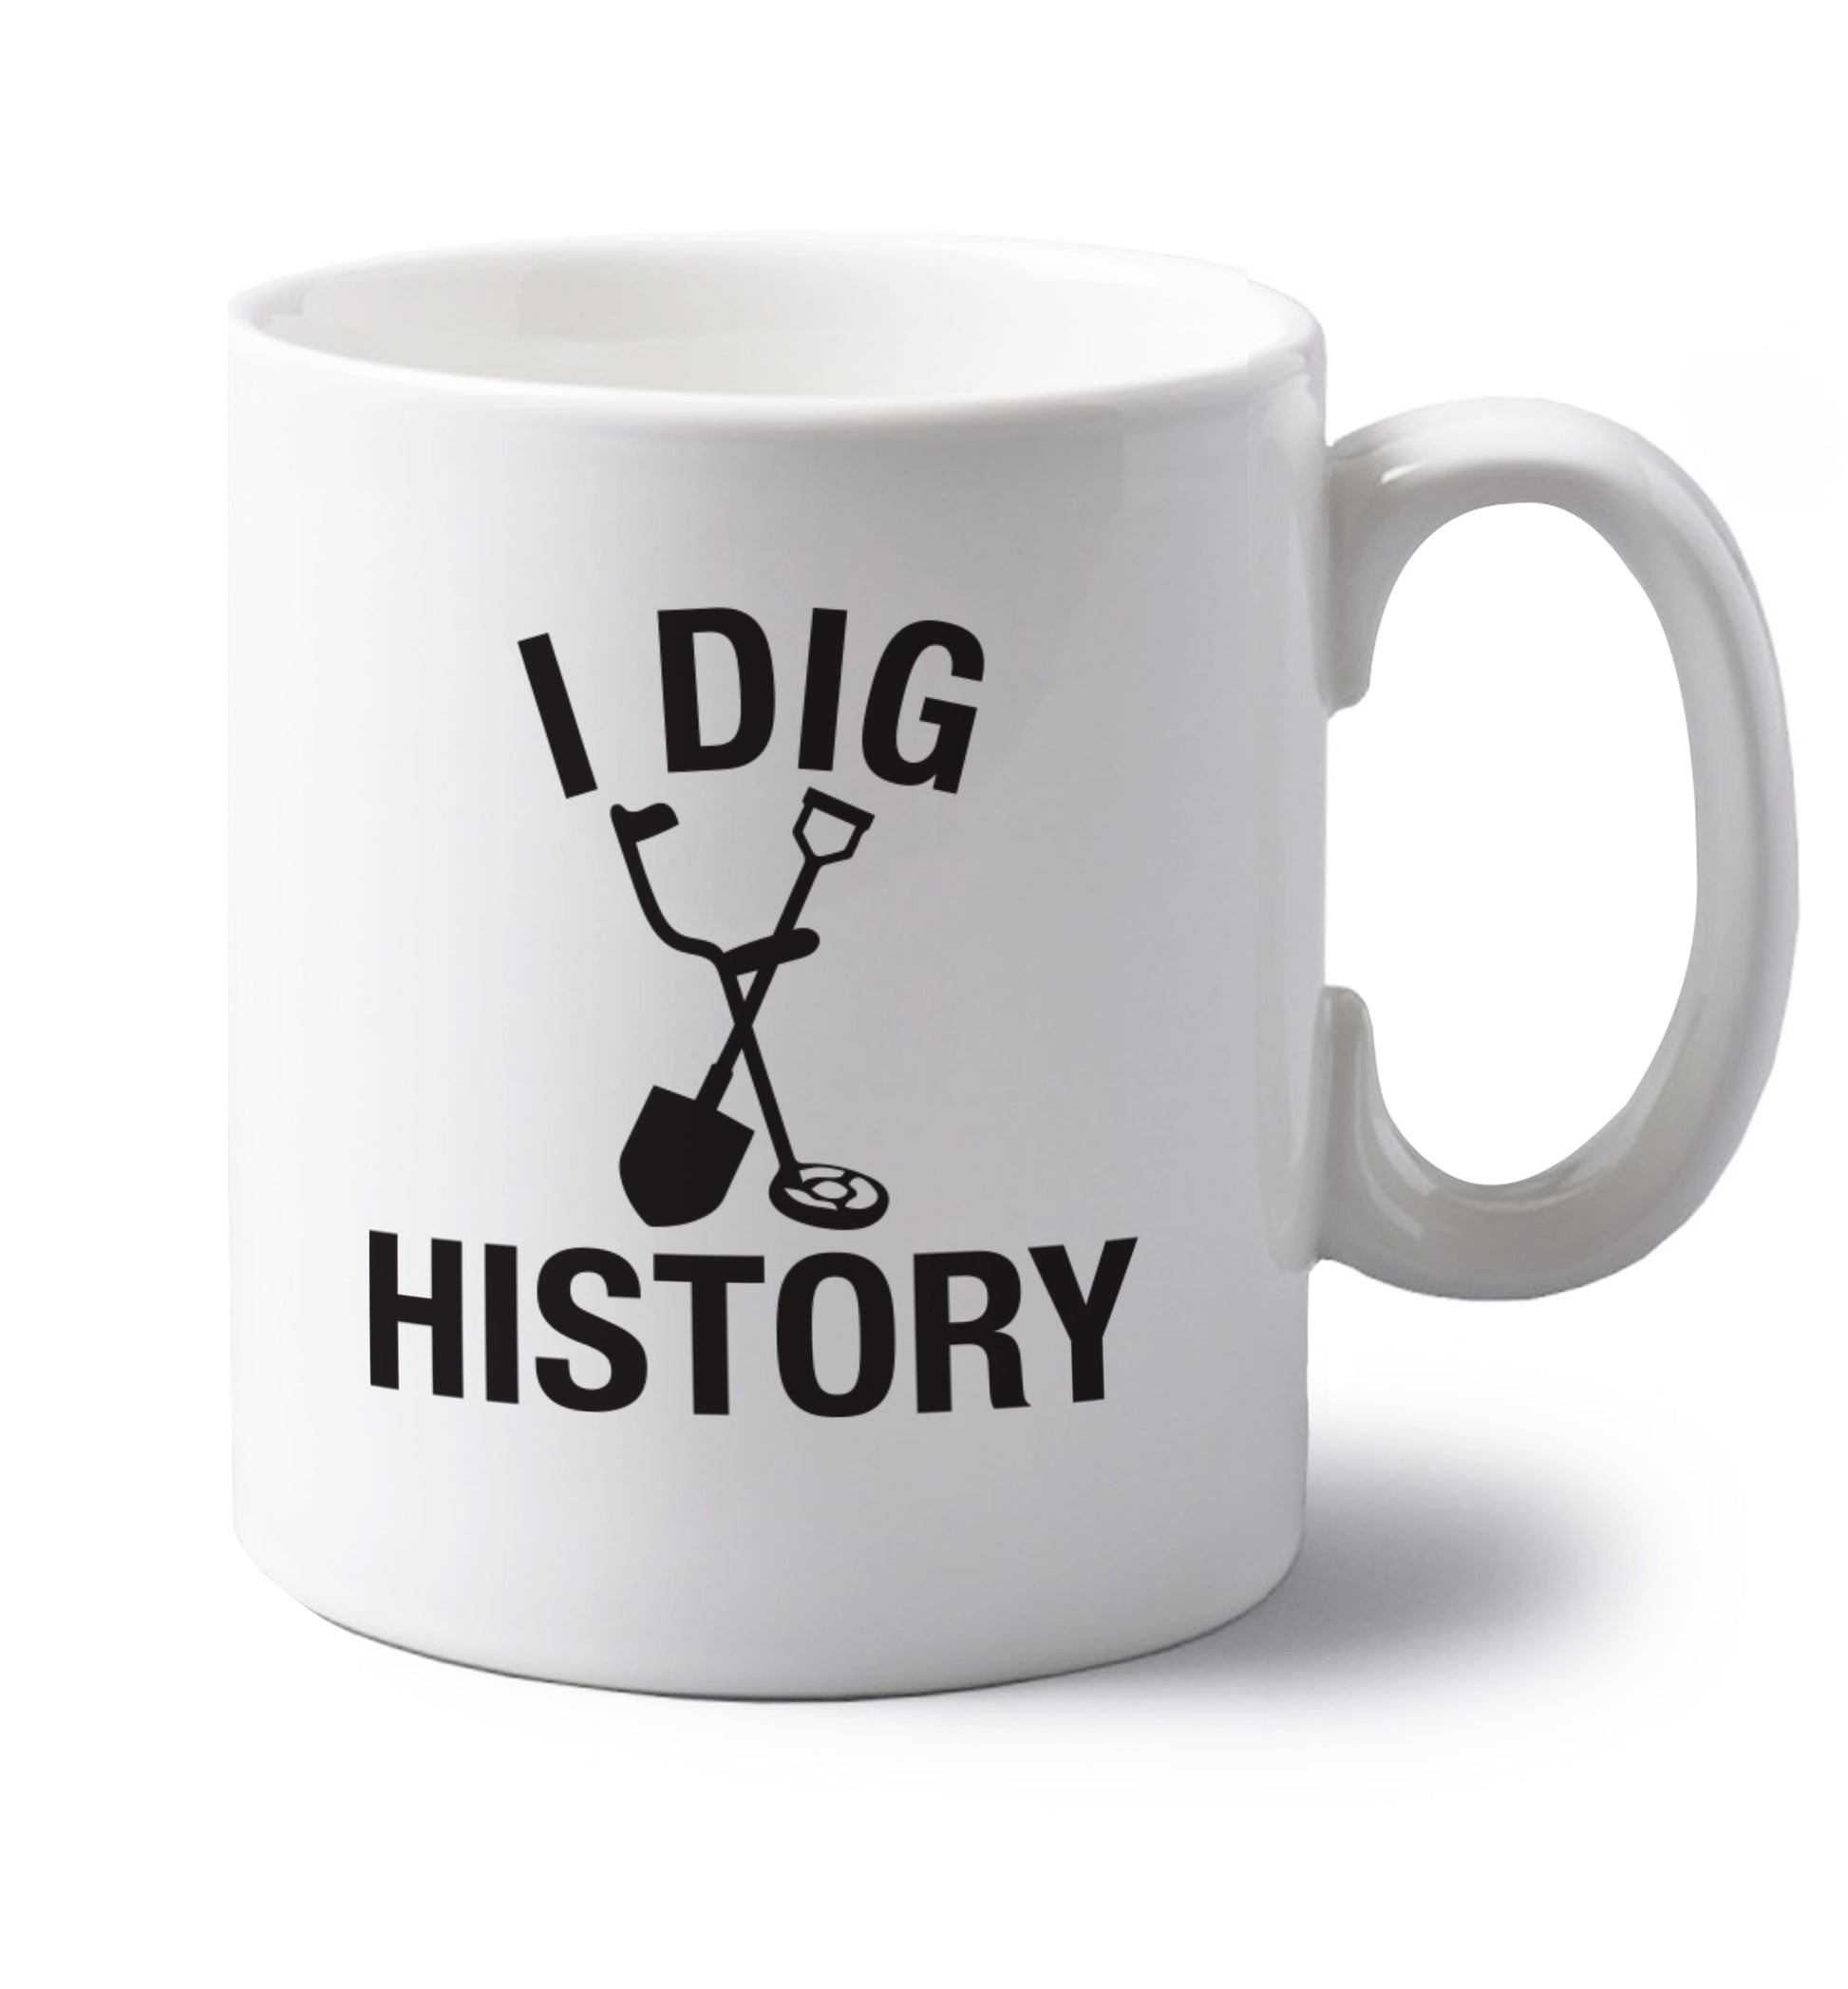 I dig history left handed white ceramic mug 